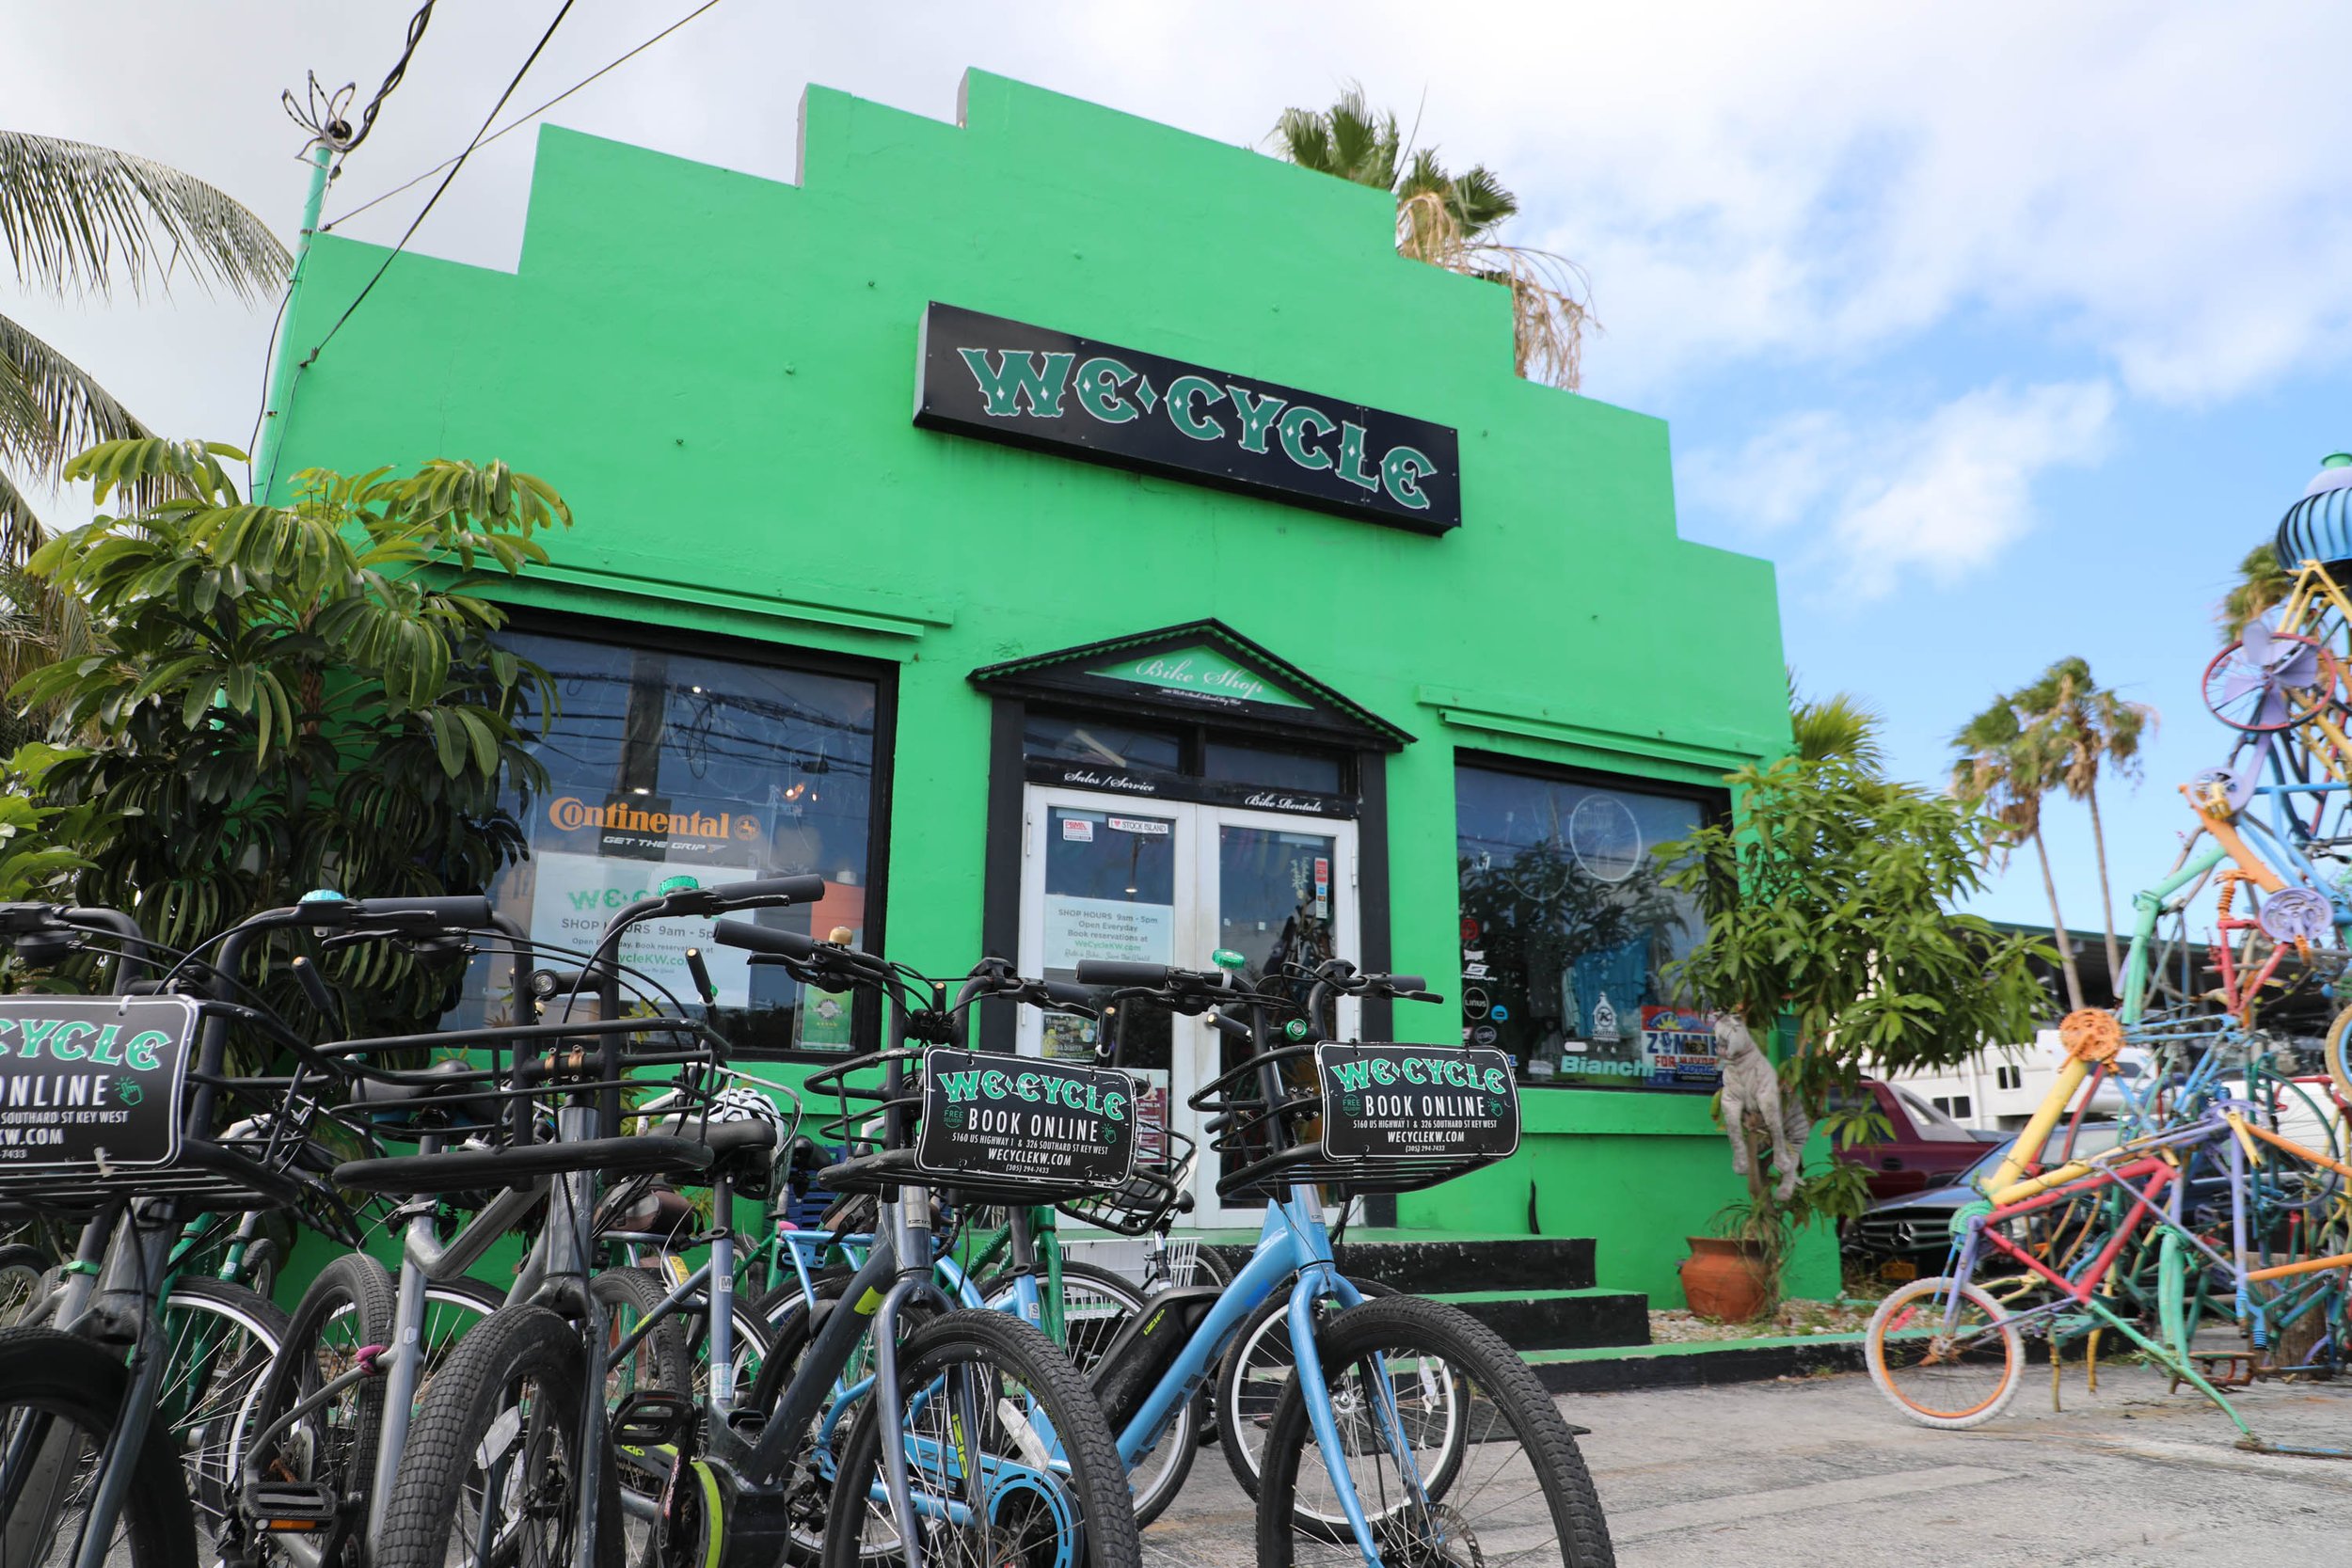 We Cycle Key West Bike Shop